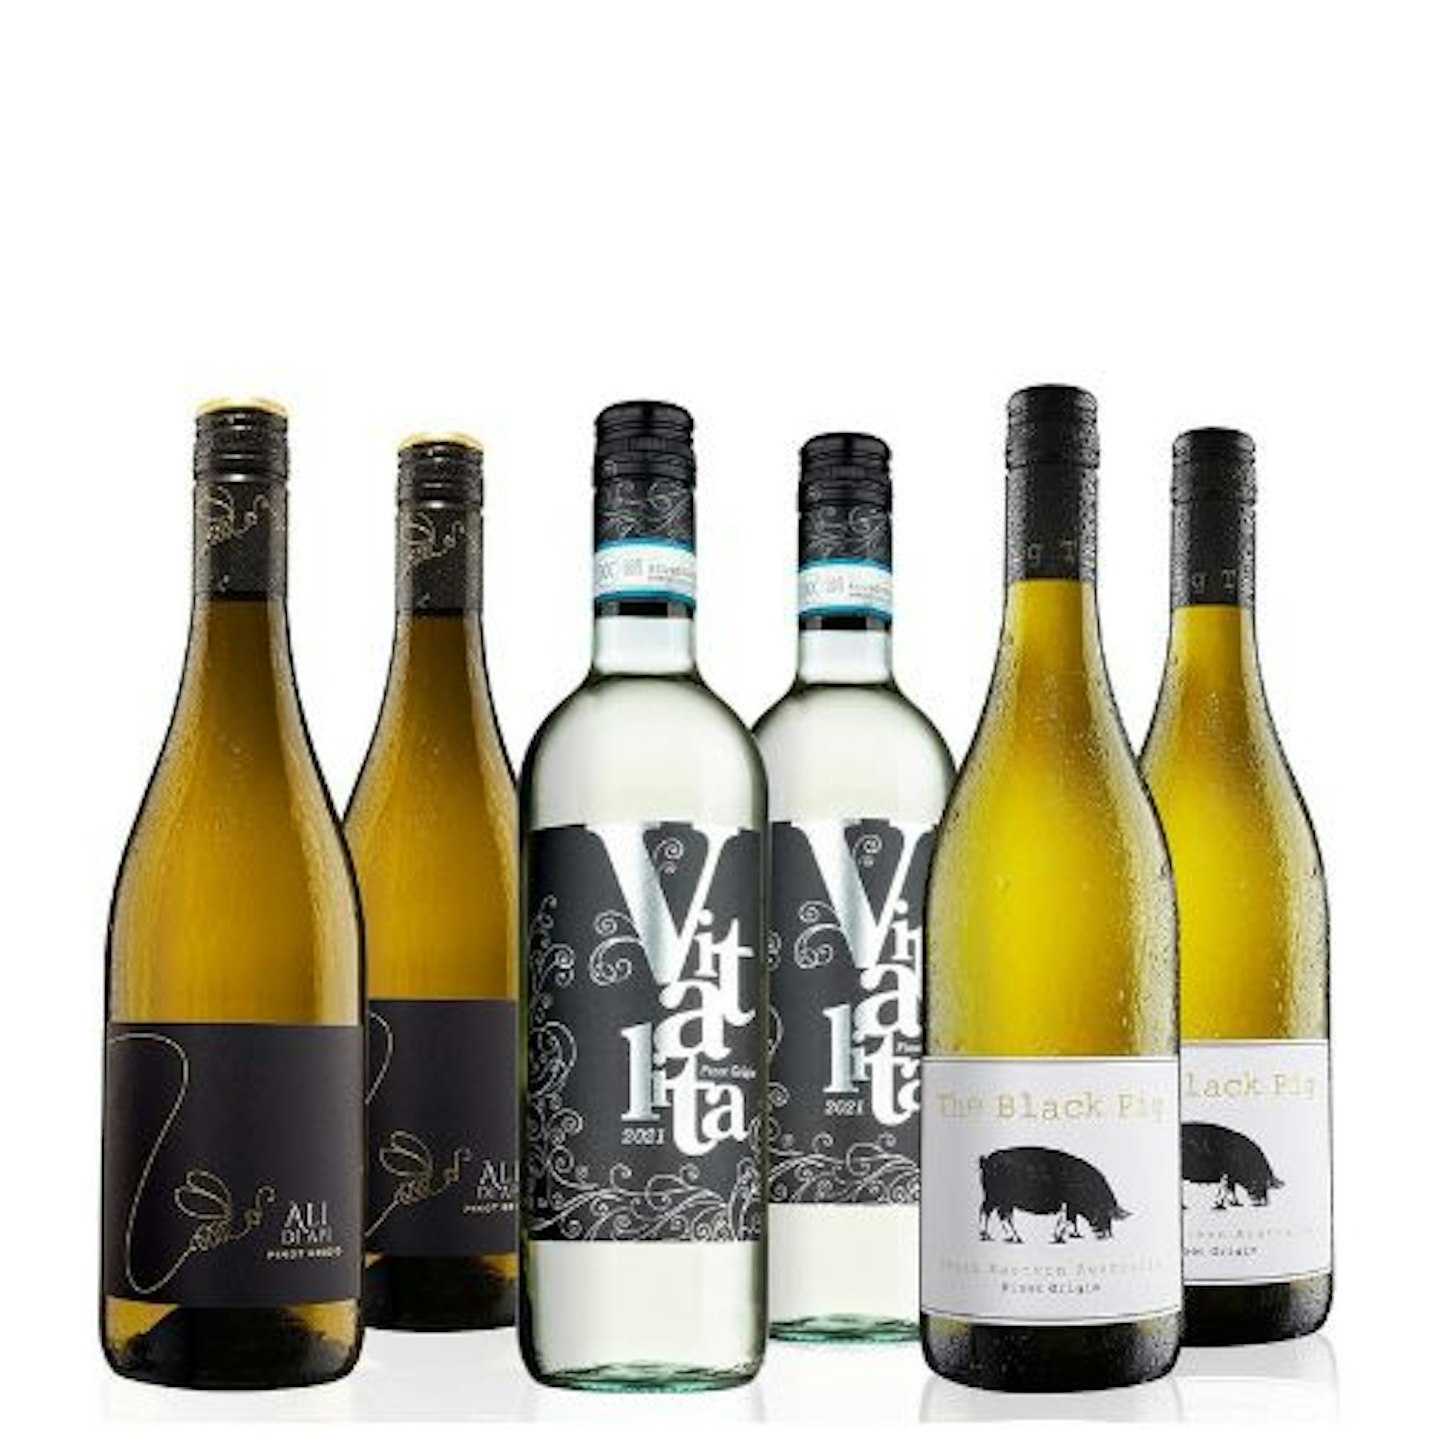 Virgin Wines Pinot Grigio Wine Selection 6x 75cl Bottles 